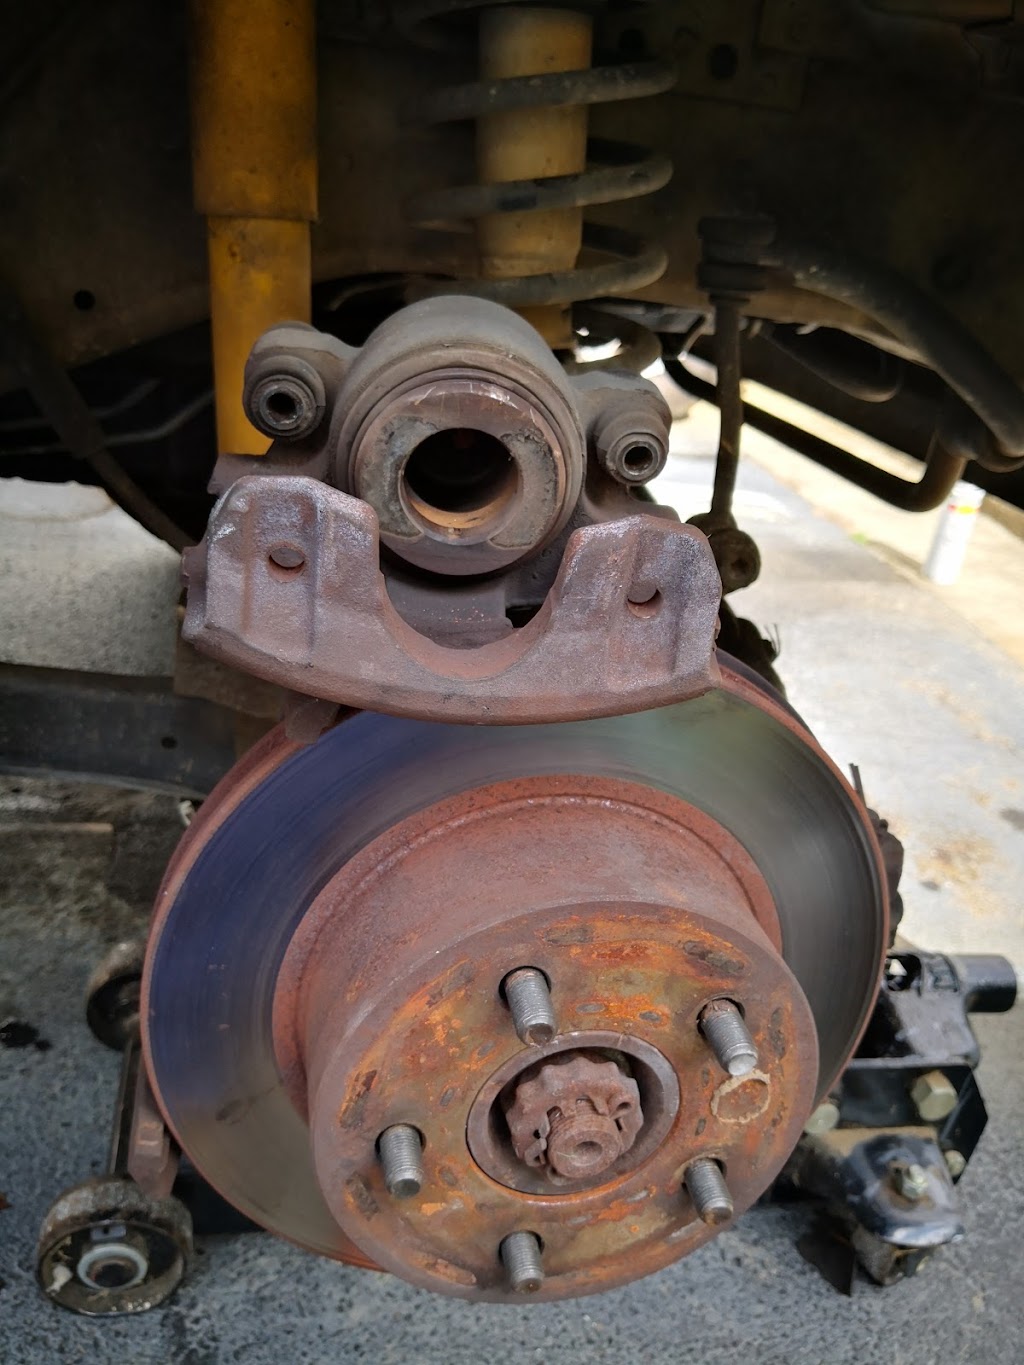 Francisco Auto Repair Inc | 1366 Montauk Hwy, Patchogue, NY 11772 | Phone: (631) 286-2295